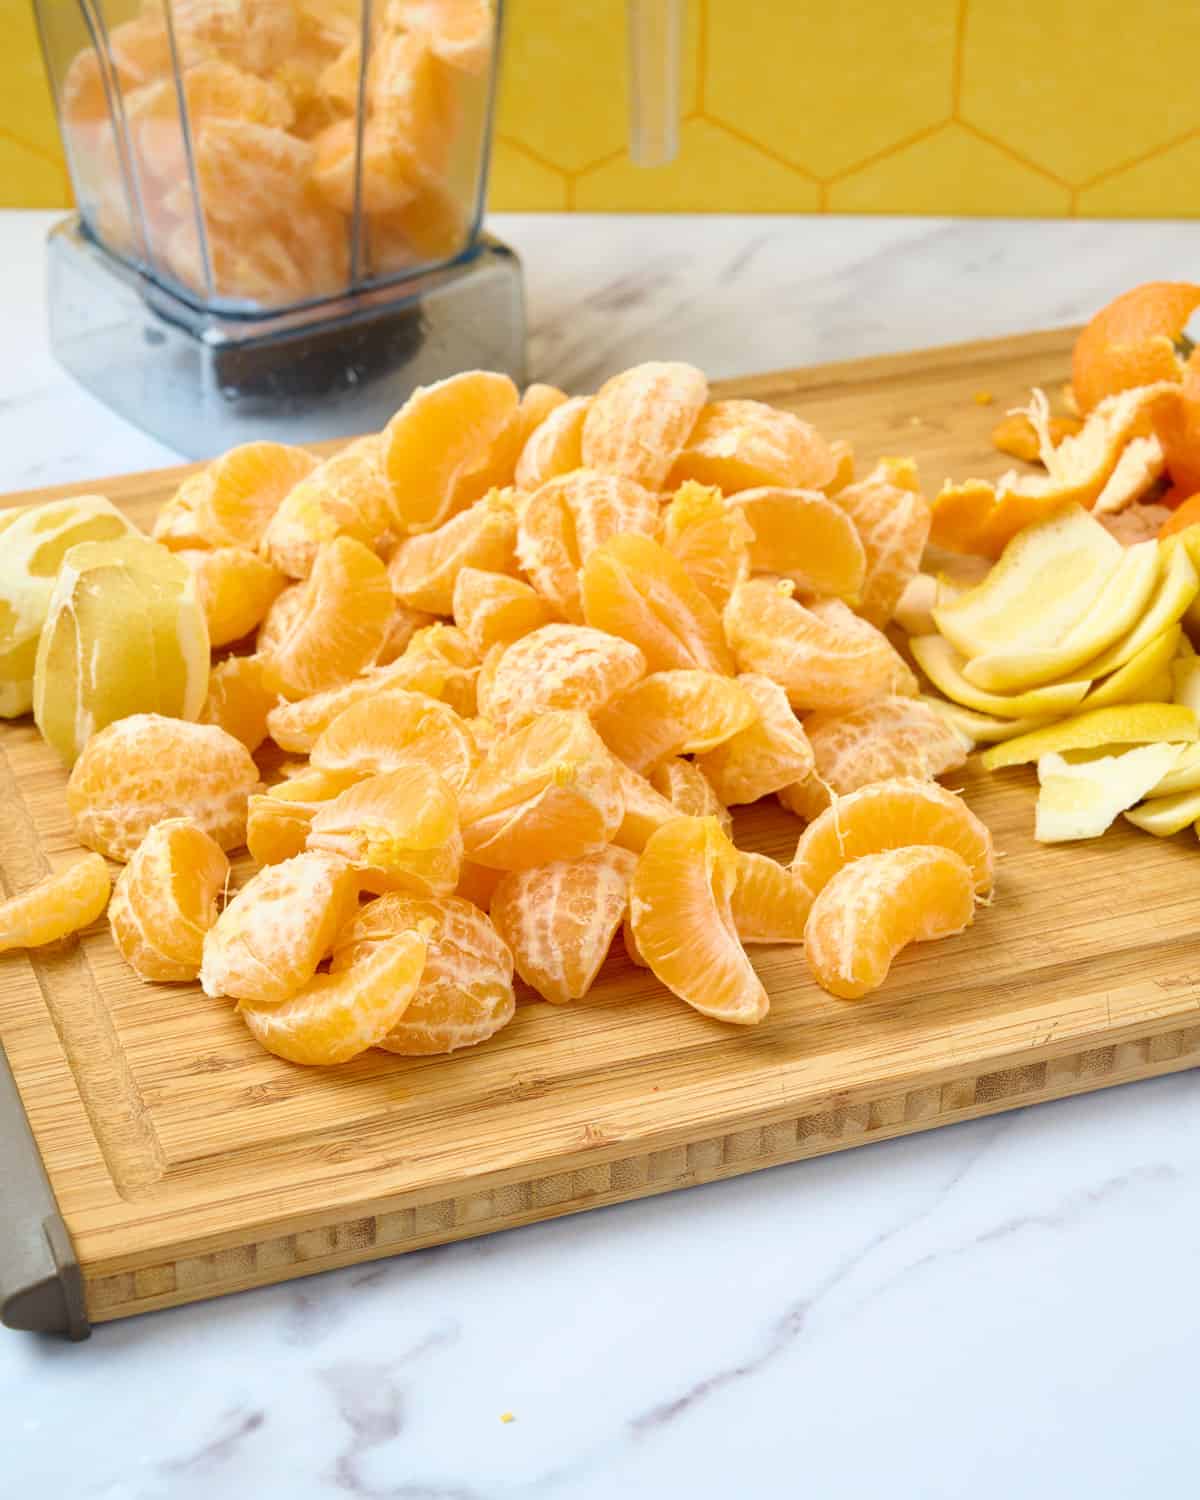 Peeled mandarins and lemons on a cutting board.